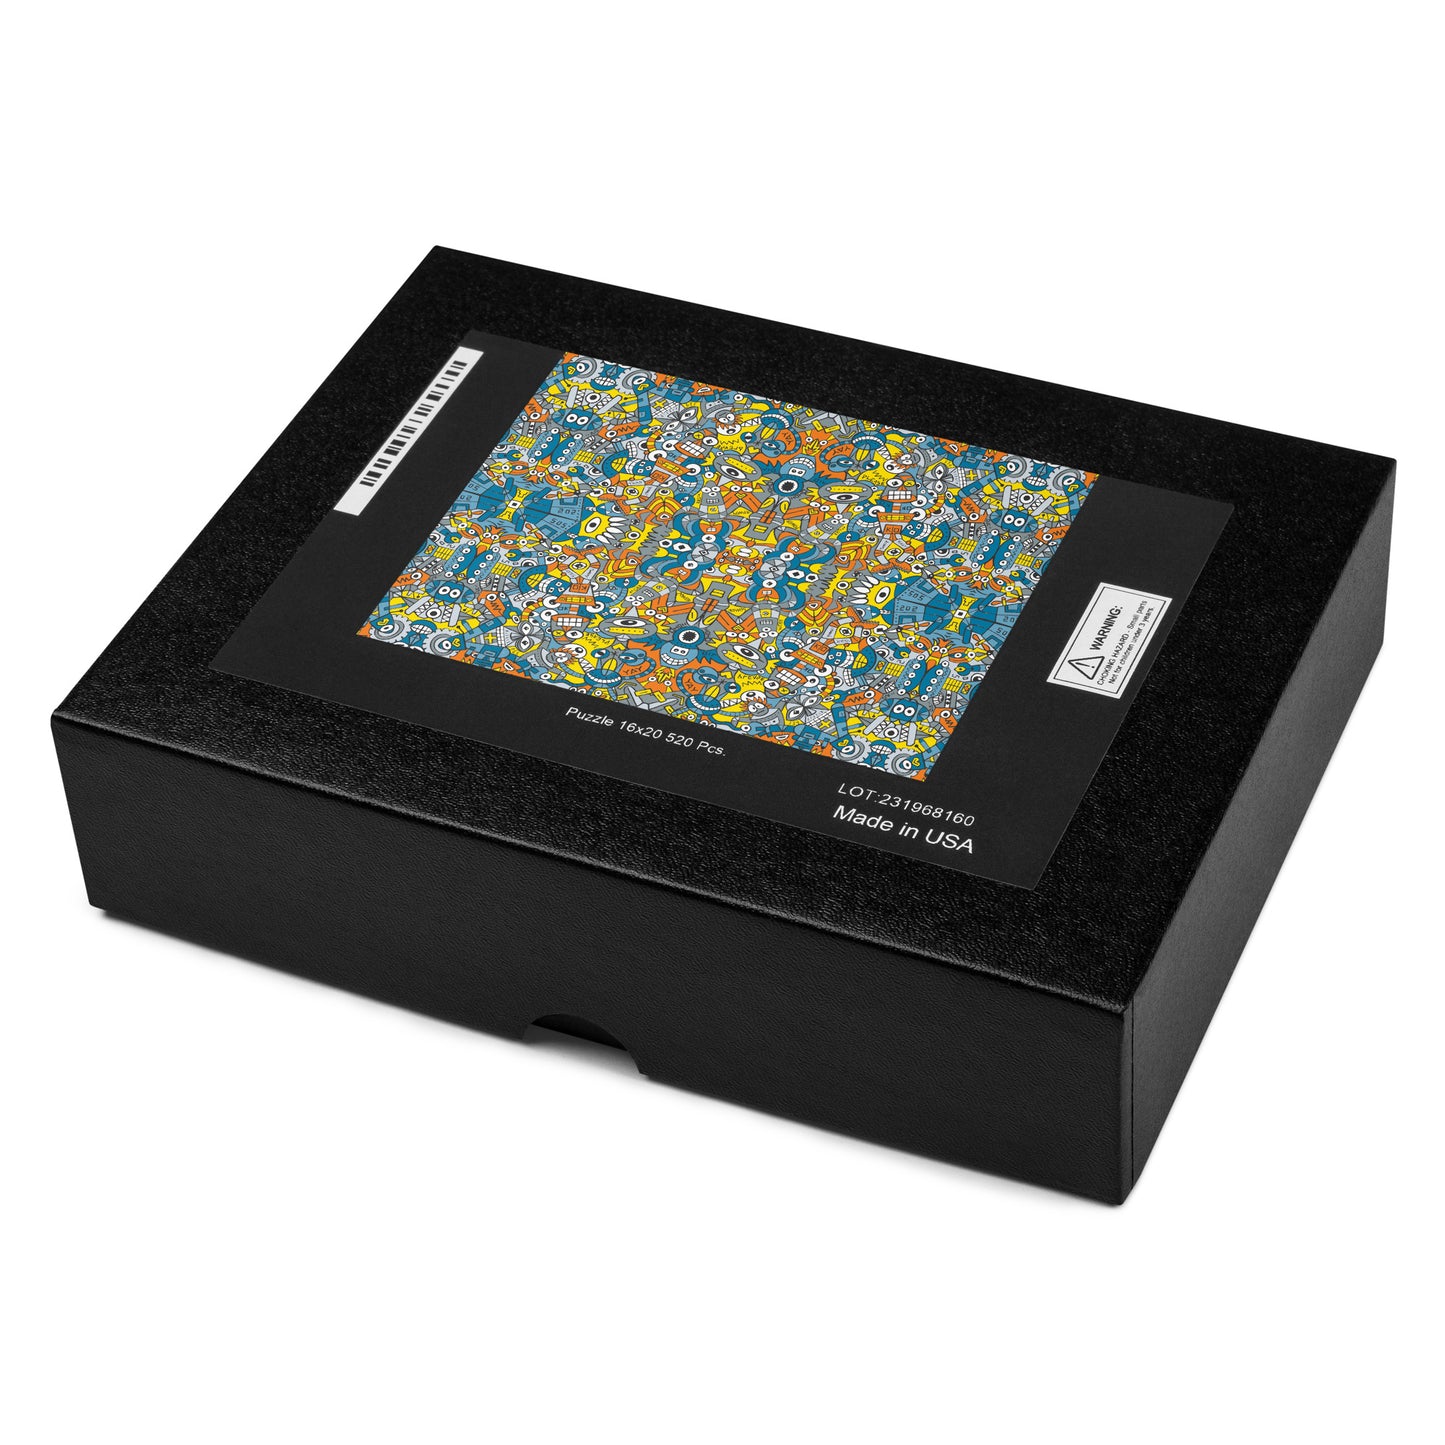 Retro robots doodle art Jigsaw puzzle. Product box